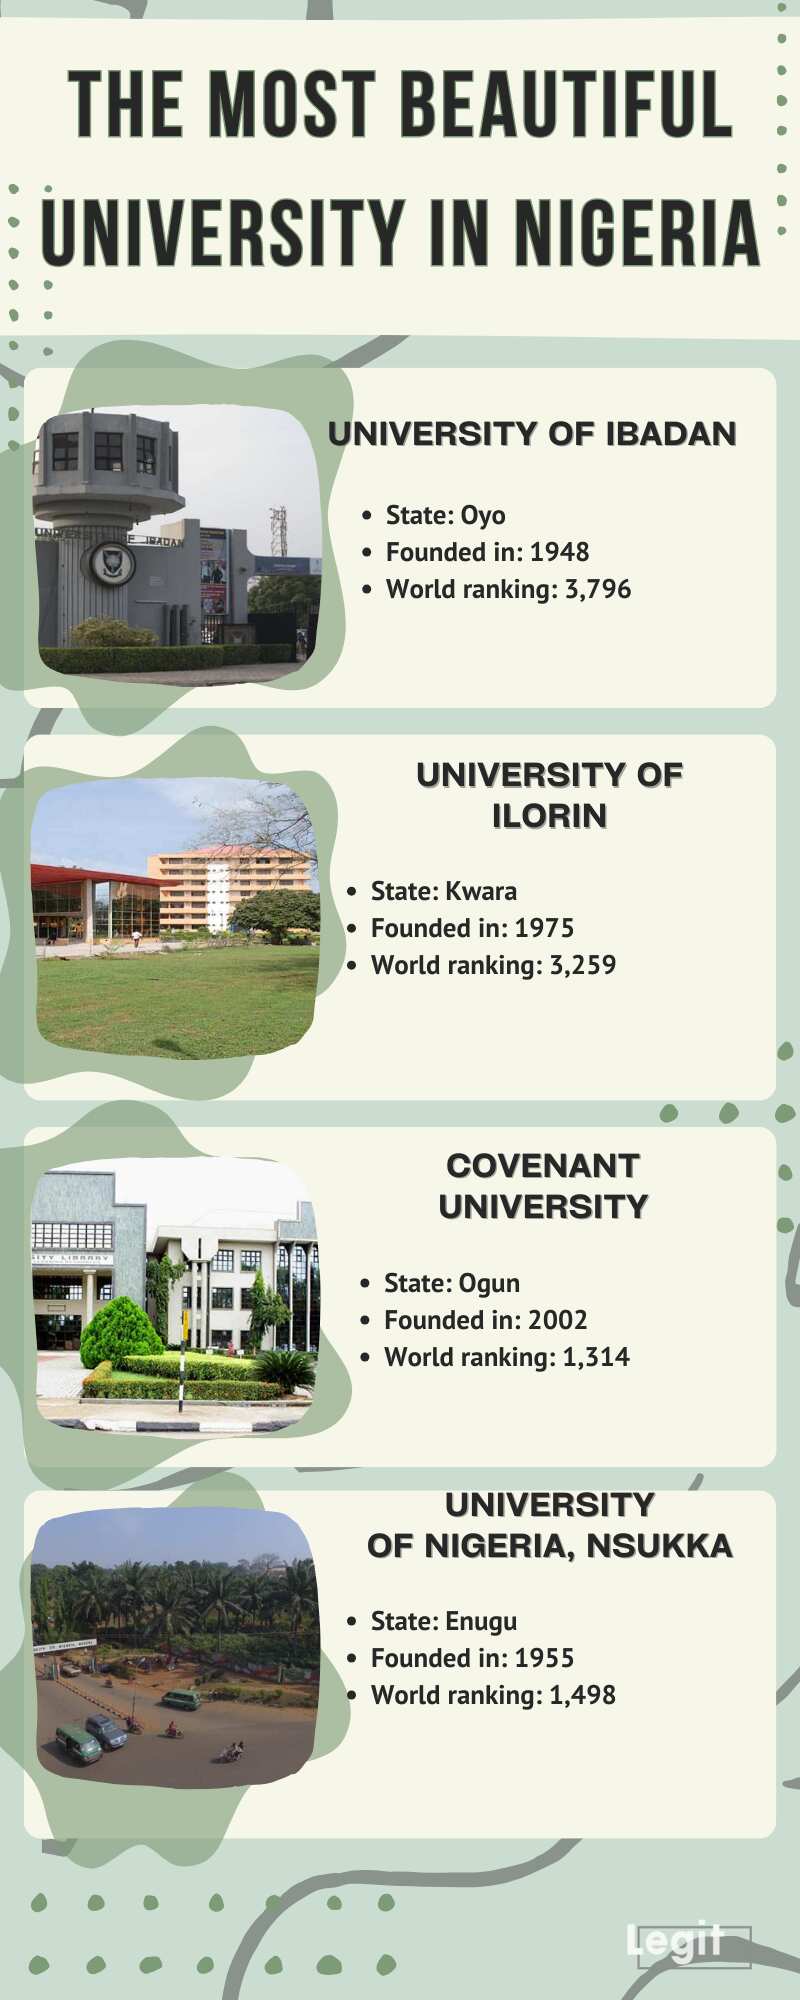 The most beautiful university in Nigeria